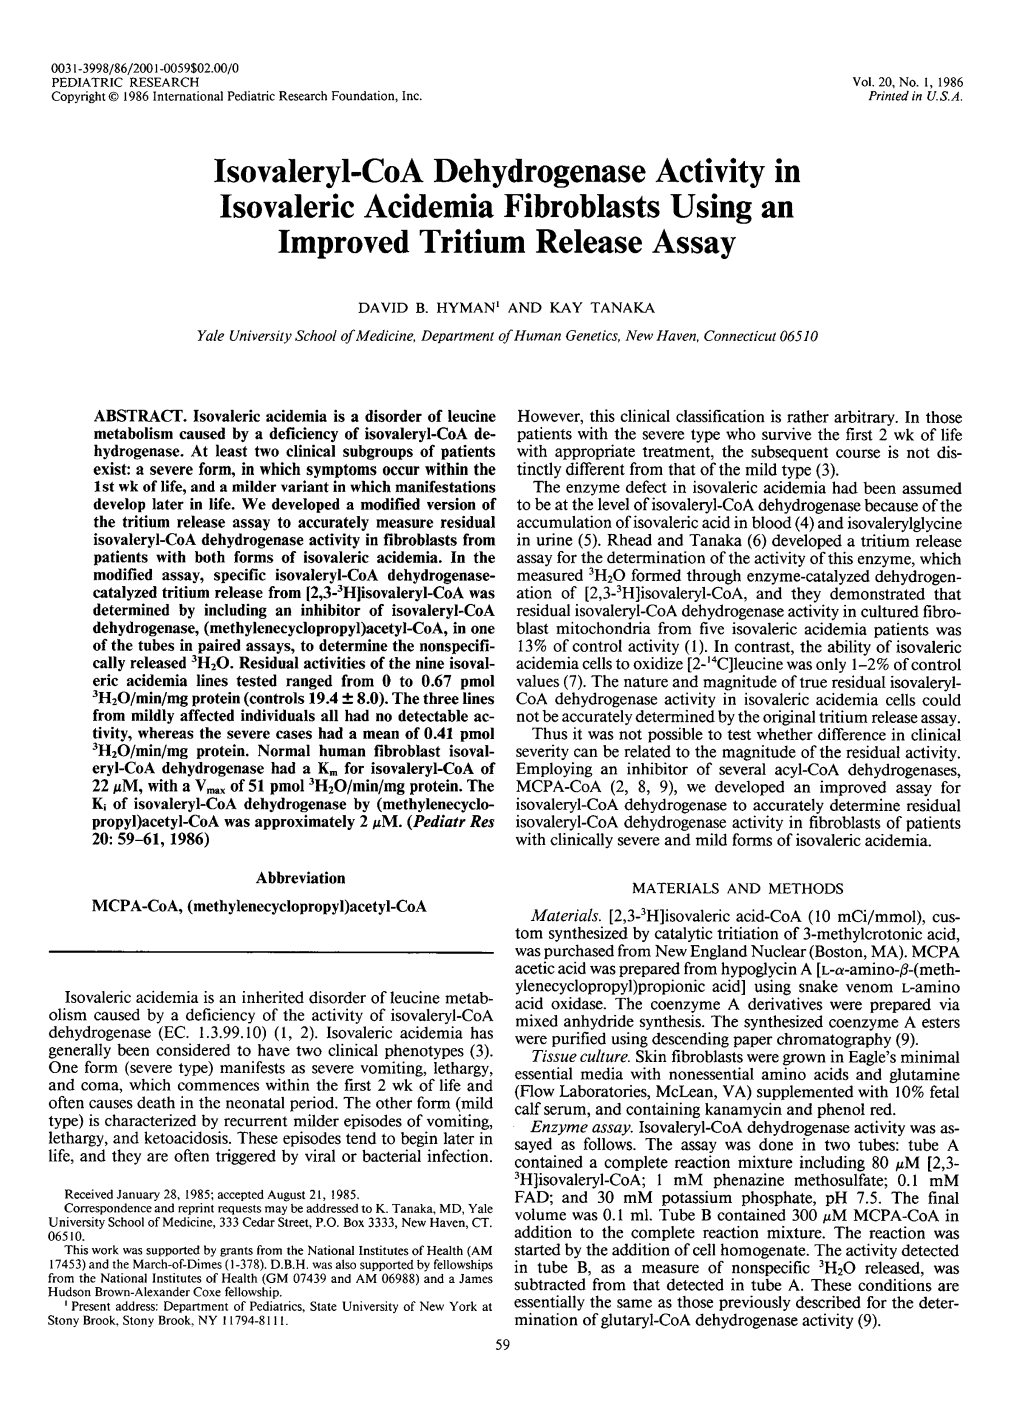 Isovaleryl-Coa Dehydrogenase Activity in Isovaleric Acidemia Fibroblasts Using an Improved Tritium Release Assay